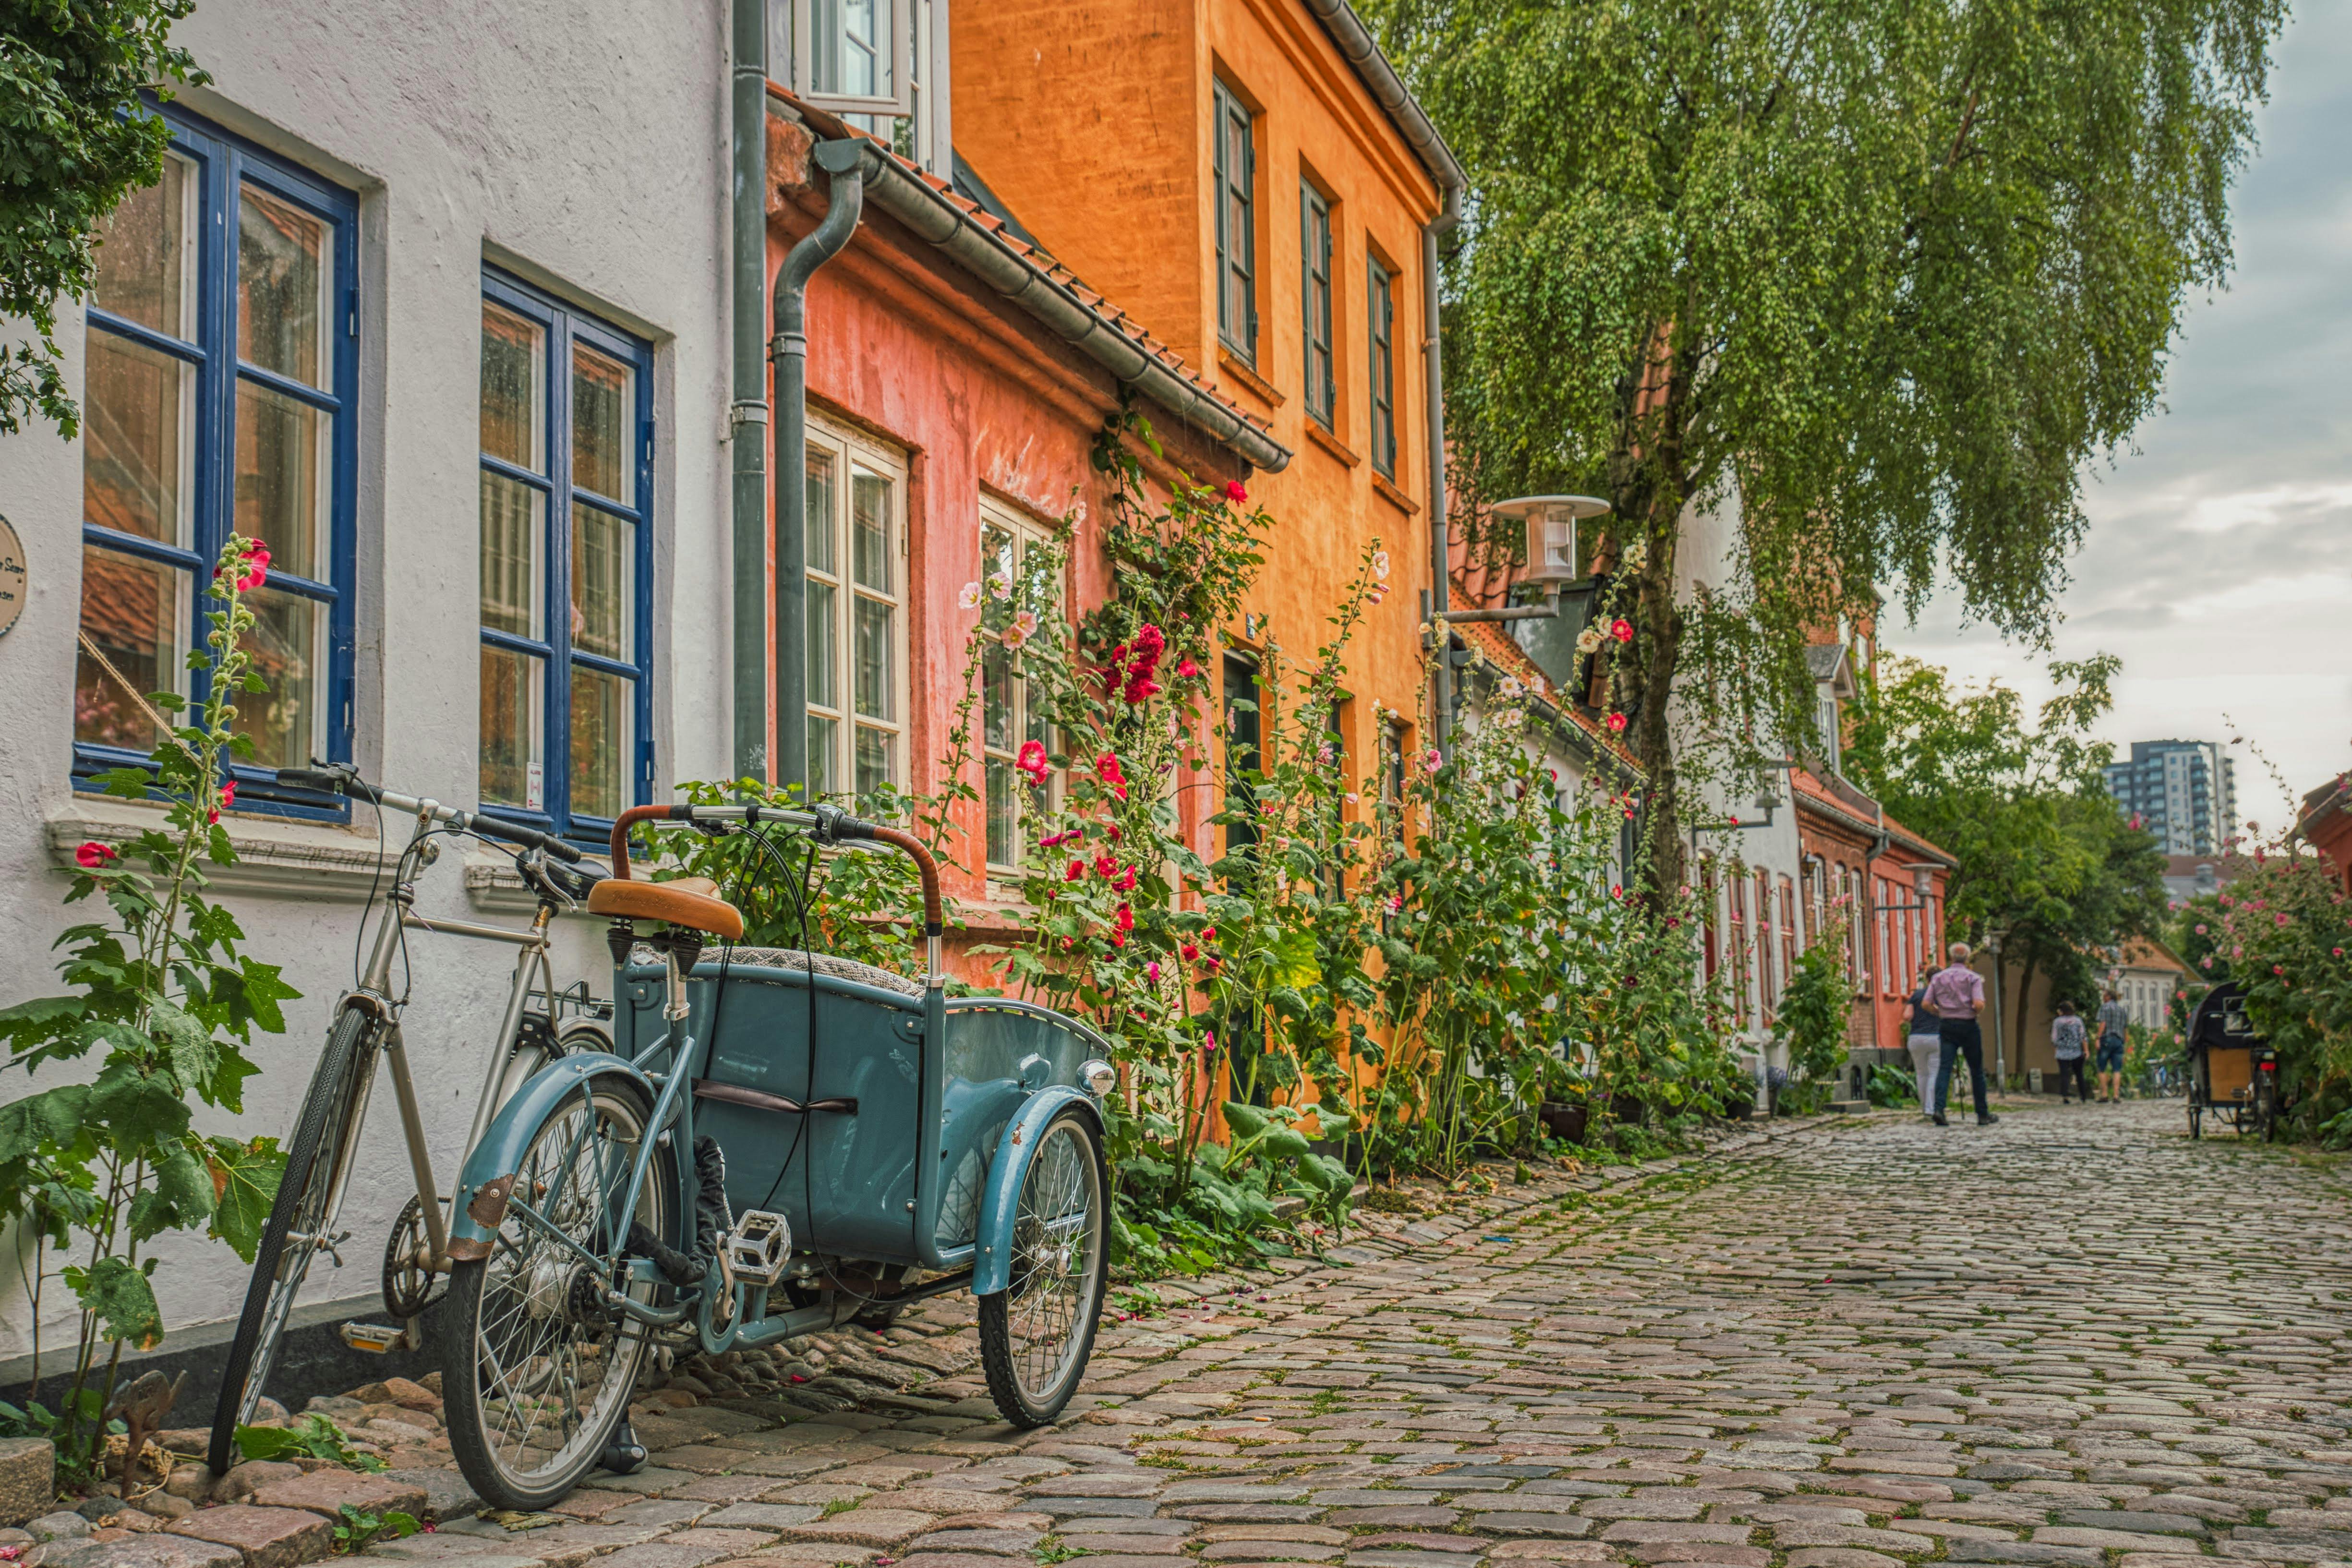 Højdepunkter i Aarhus med privat byvandring